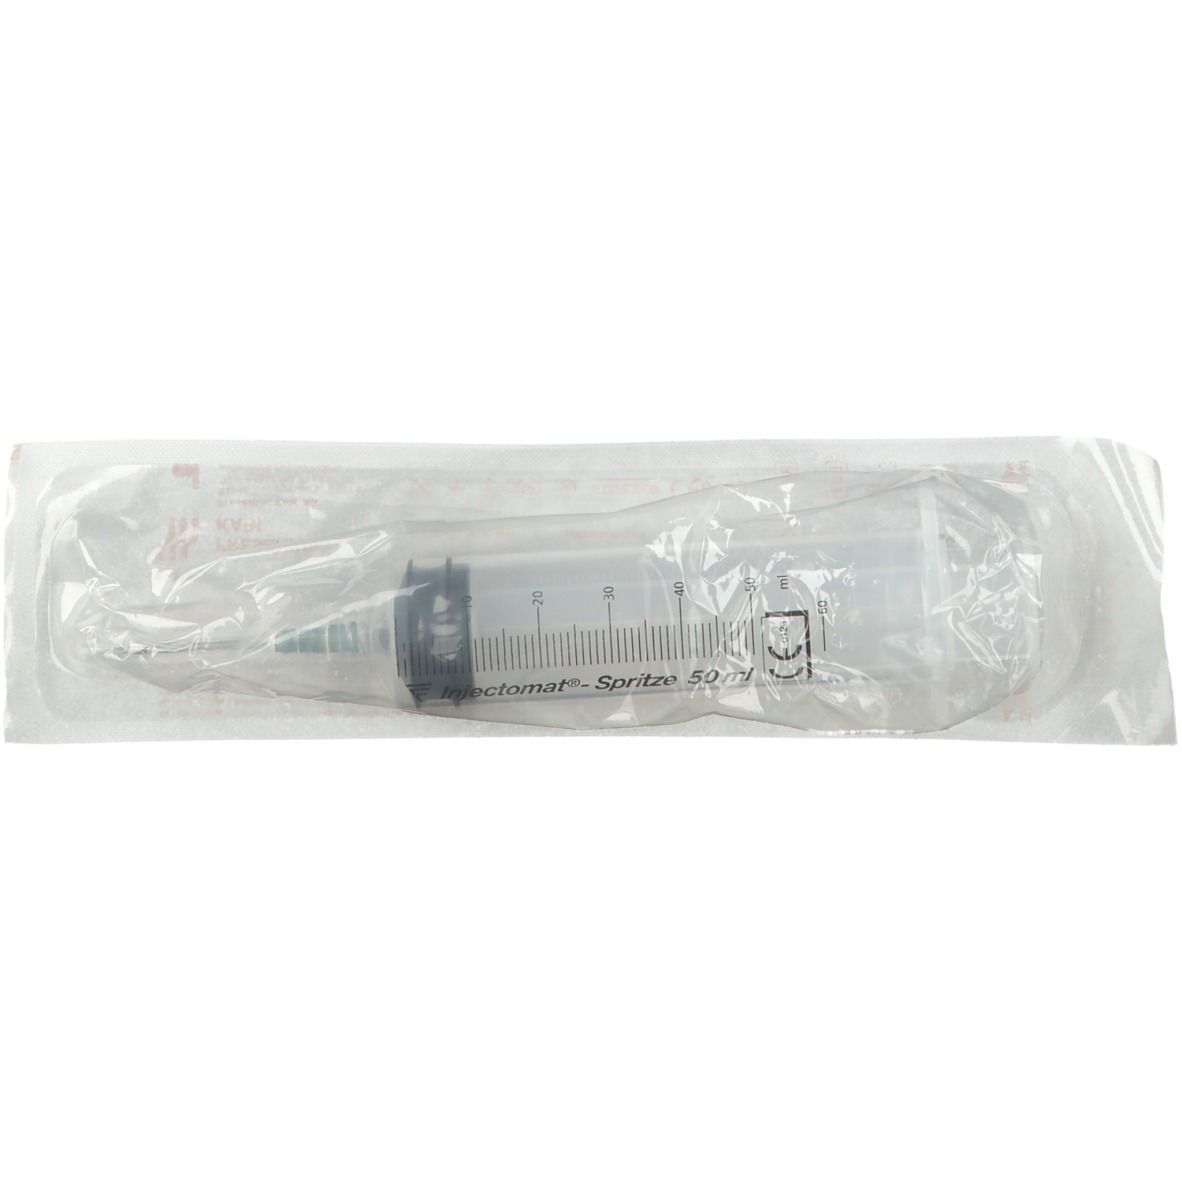 Injectomat® Spritze mit Kanüle 50 ml